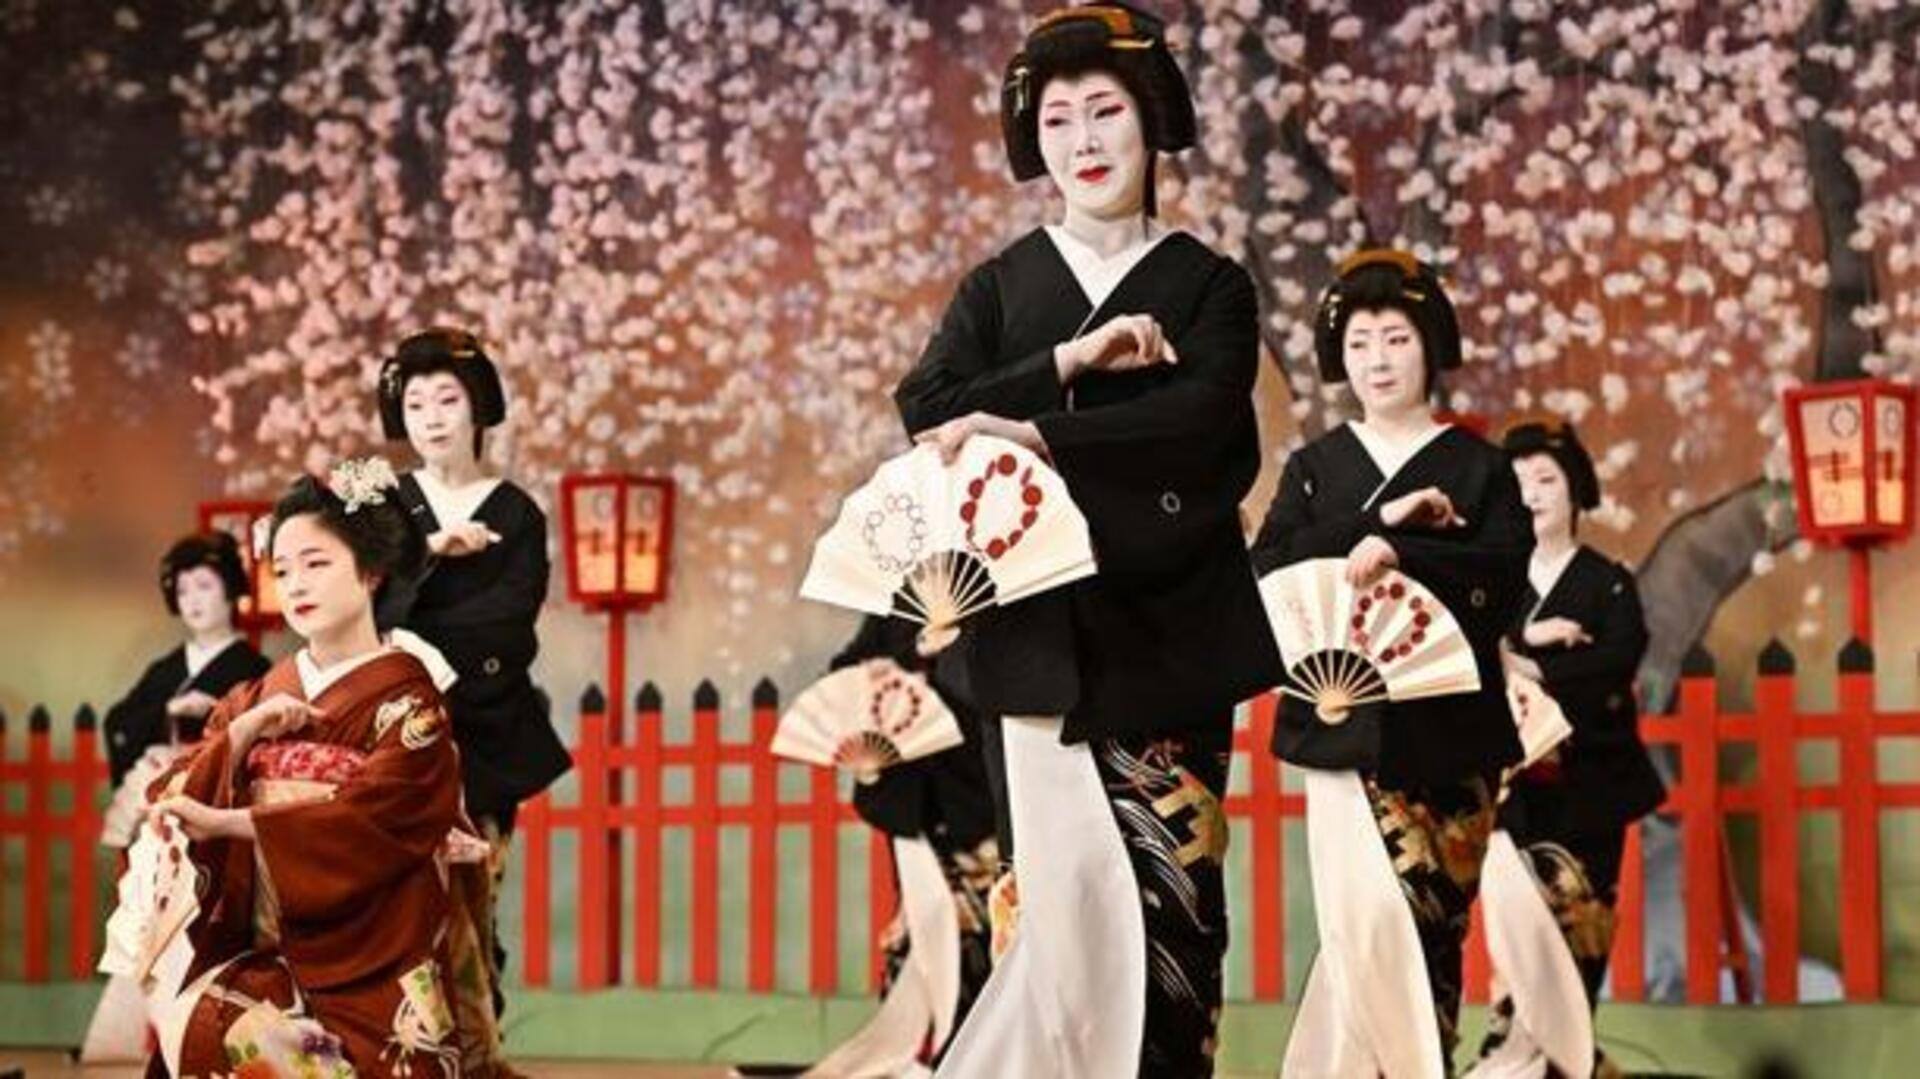 Enchanting geisha dance performances throughout seasons